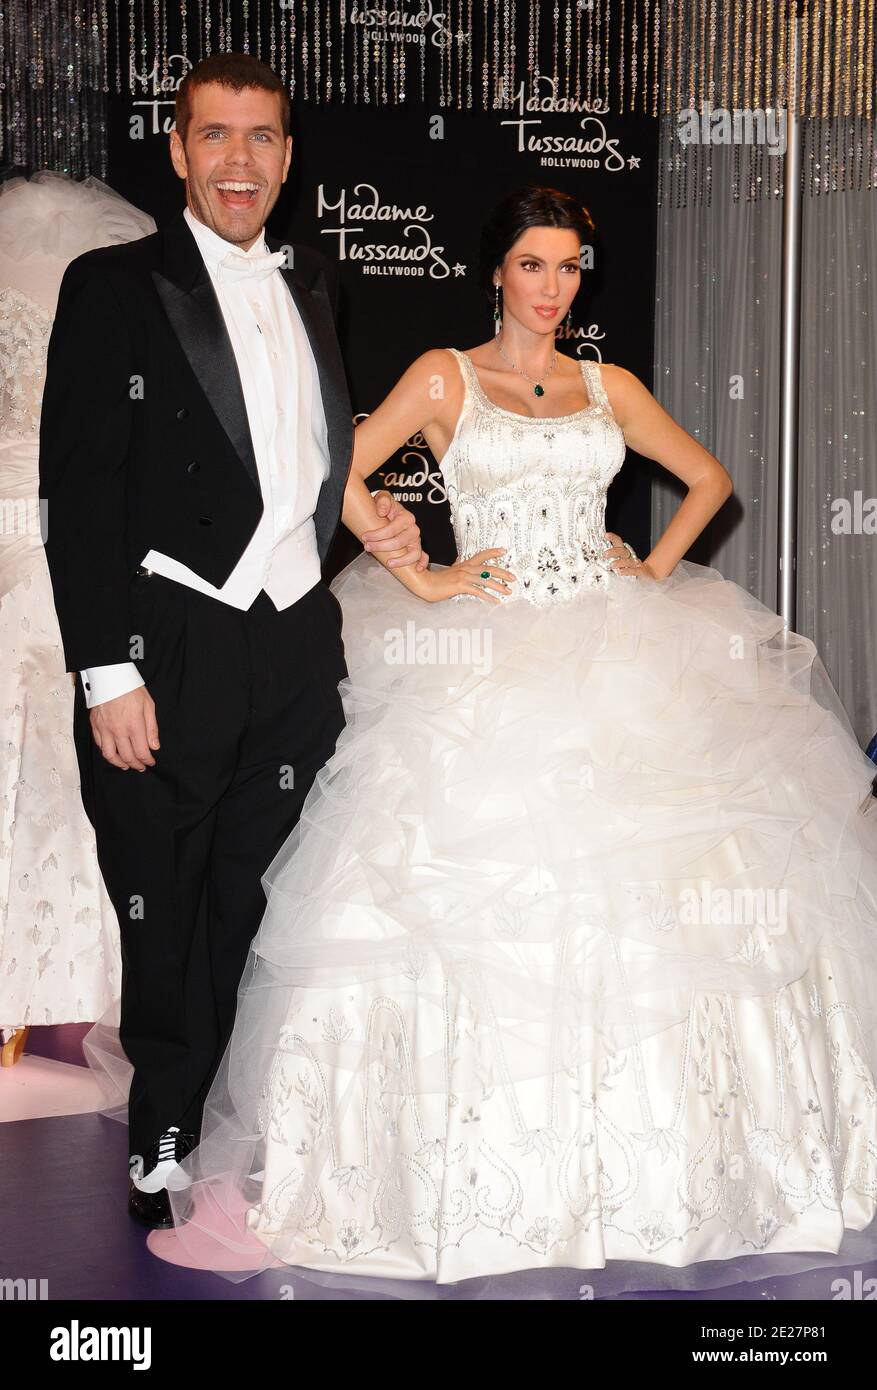 Perez Hilton unveils the all new Kim Kardashian in wedding dress wax figure  at Madame Tussauds Hollywood. Kim Kardashian will marry Kris Humphries on  August 20th. Los Angeles, August 18, 2011. Photo